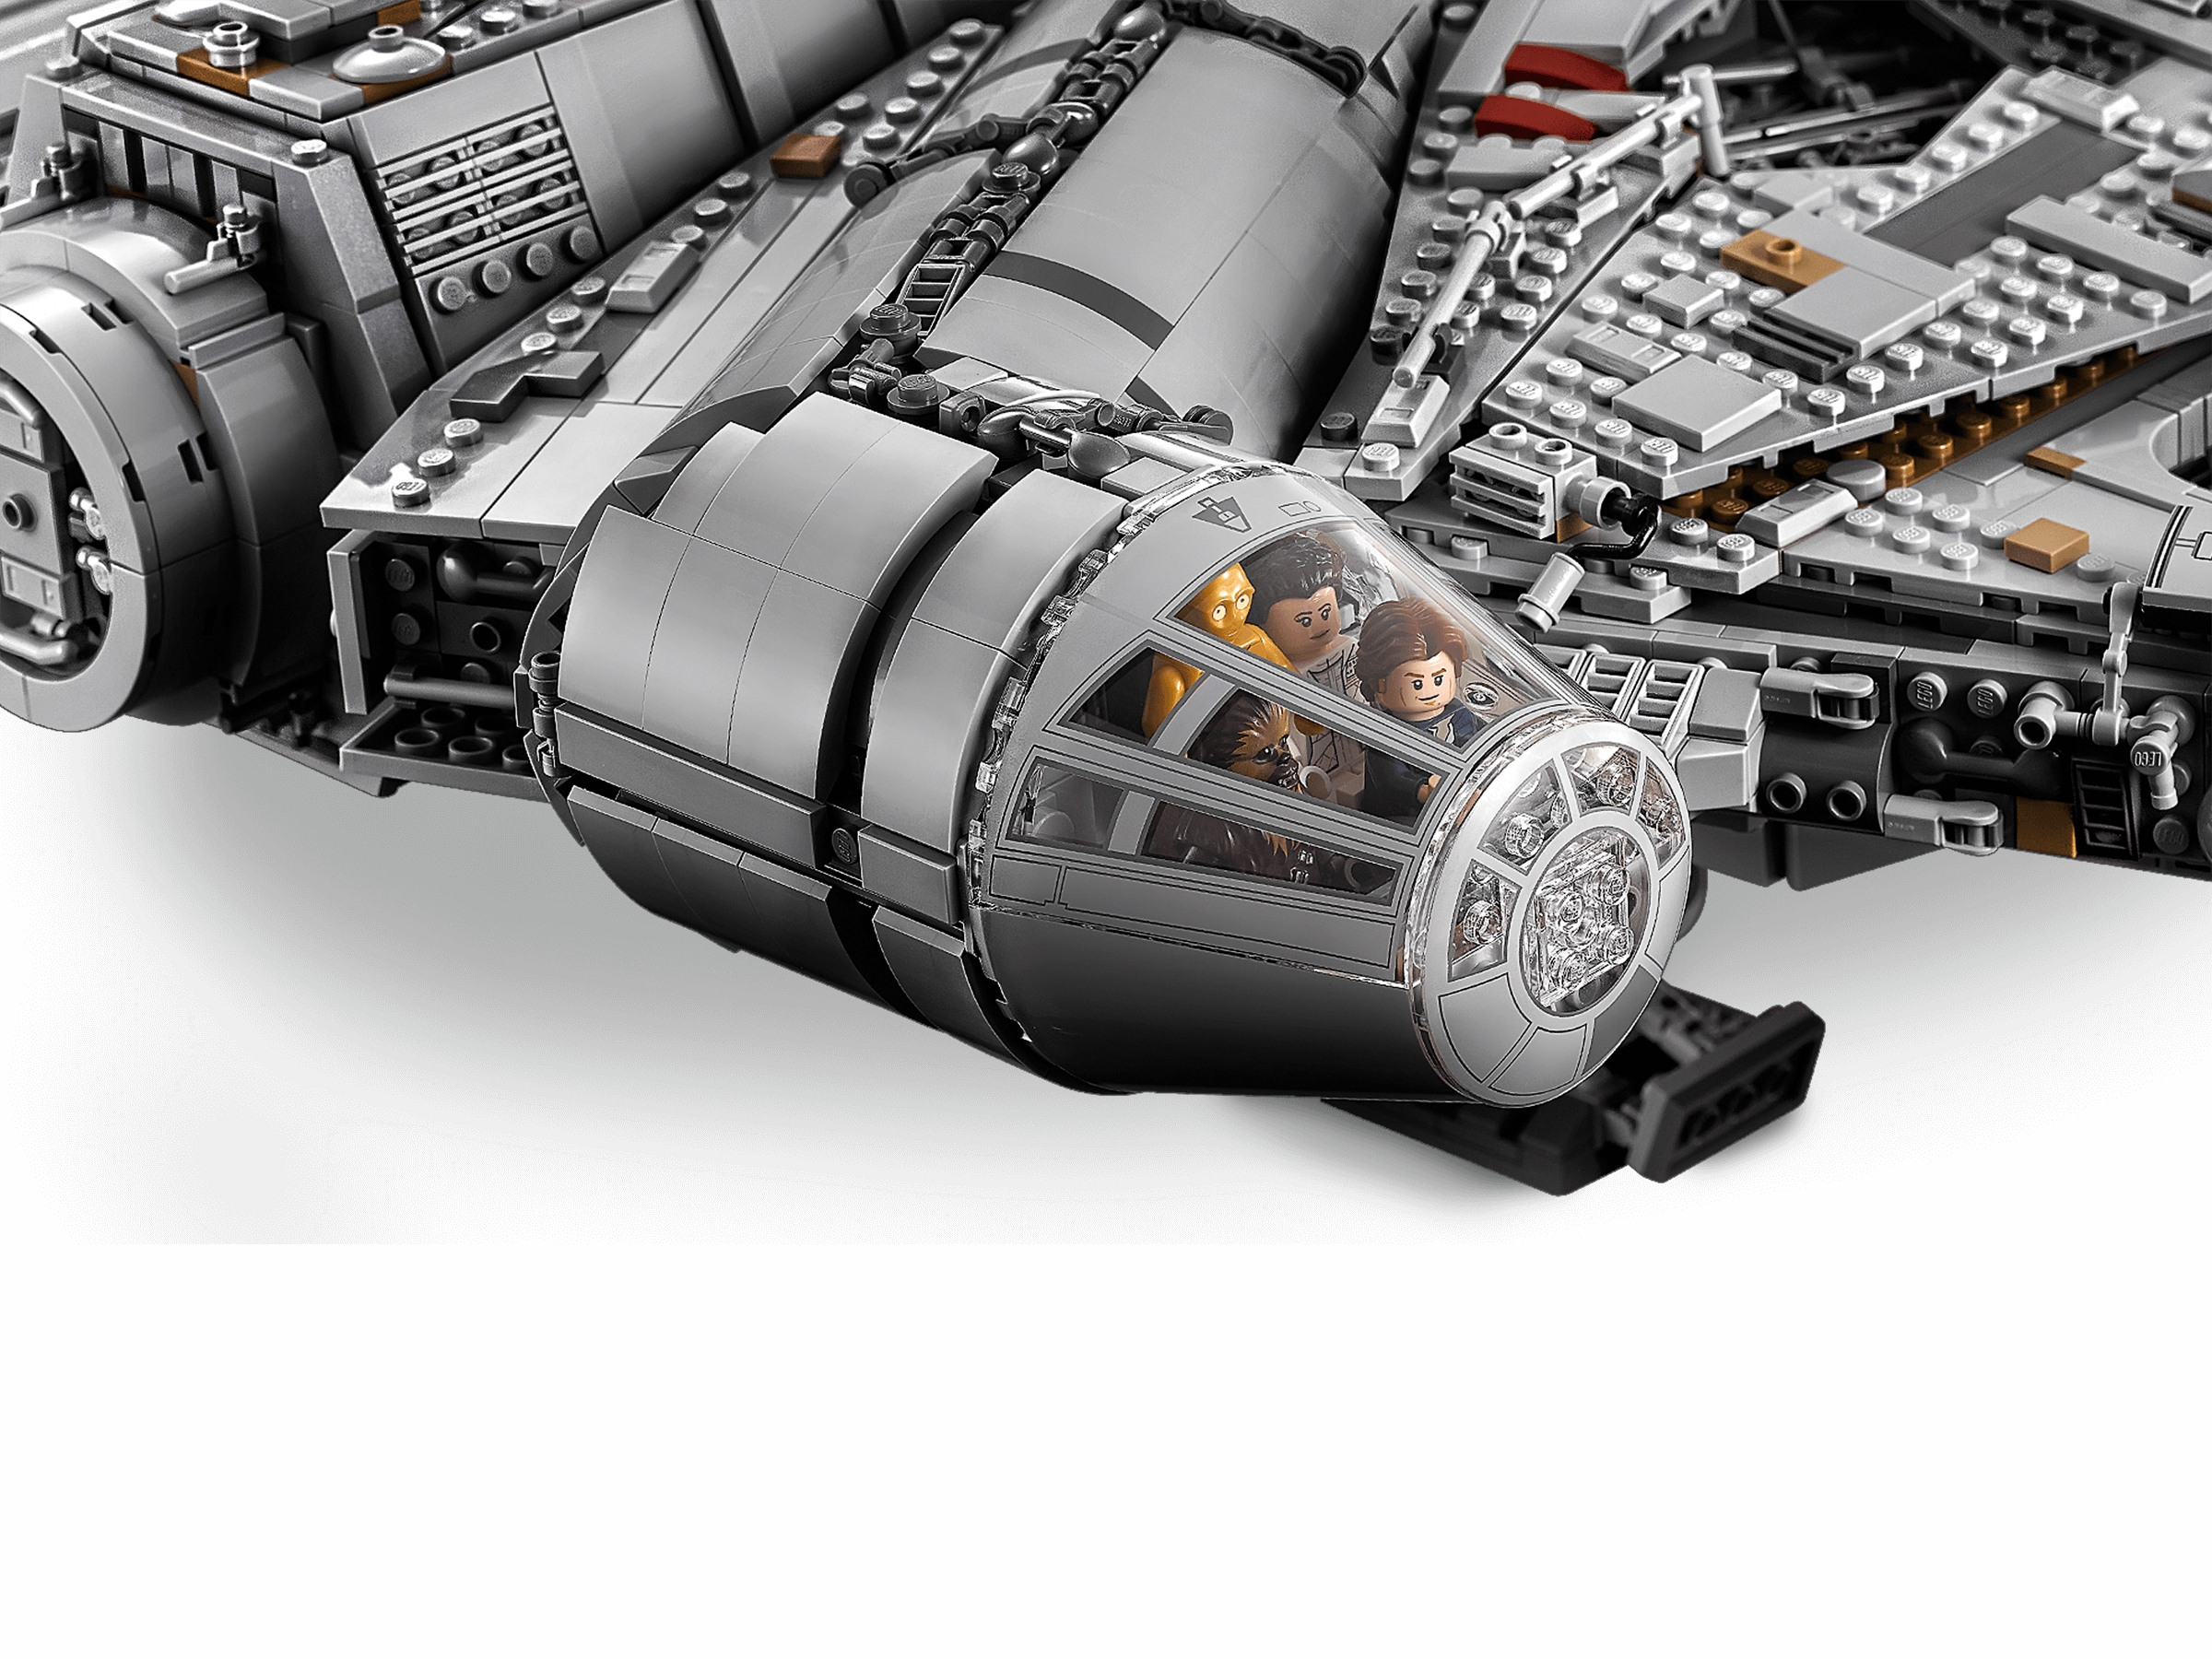 Millennium Falcon™ 75192 | Star Wars™ | Buy online at Official LEGO® Shop US